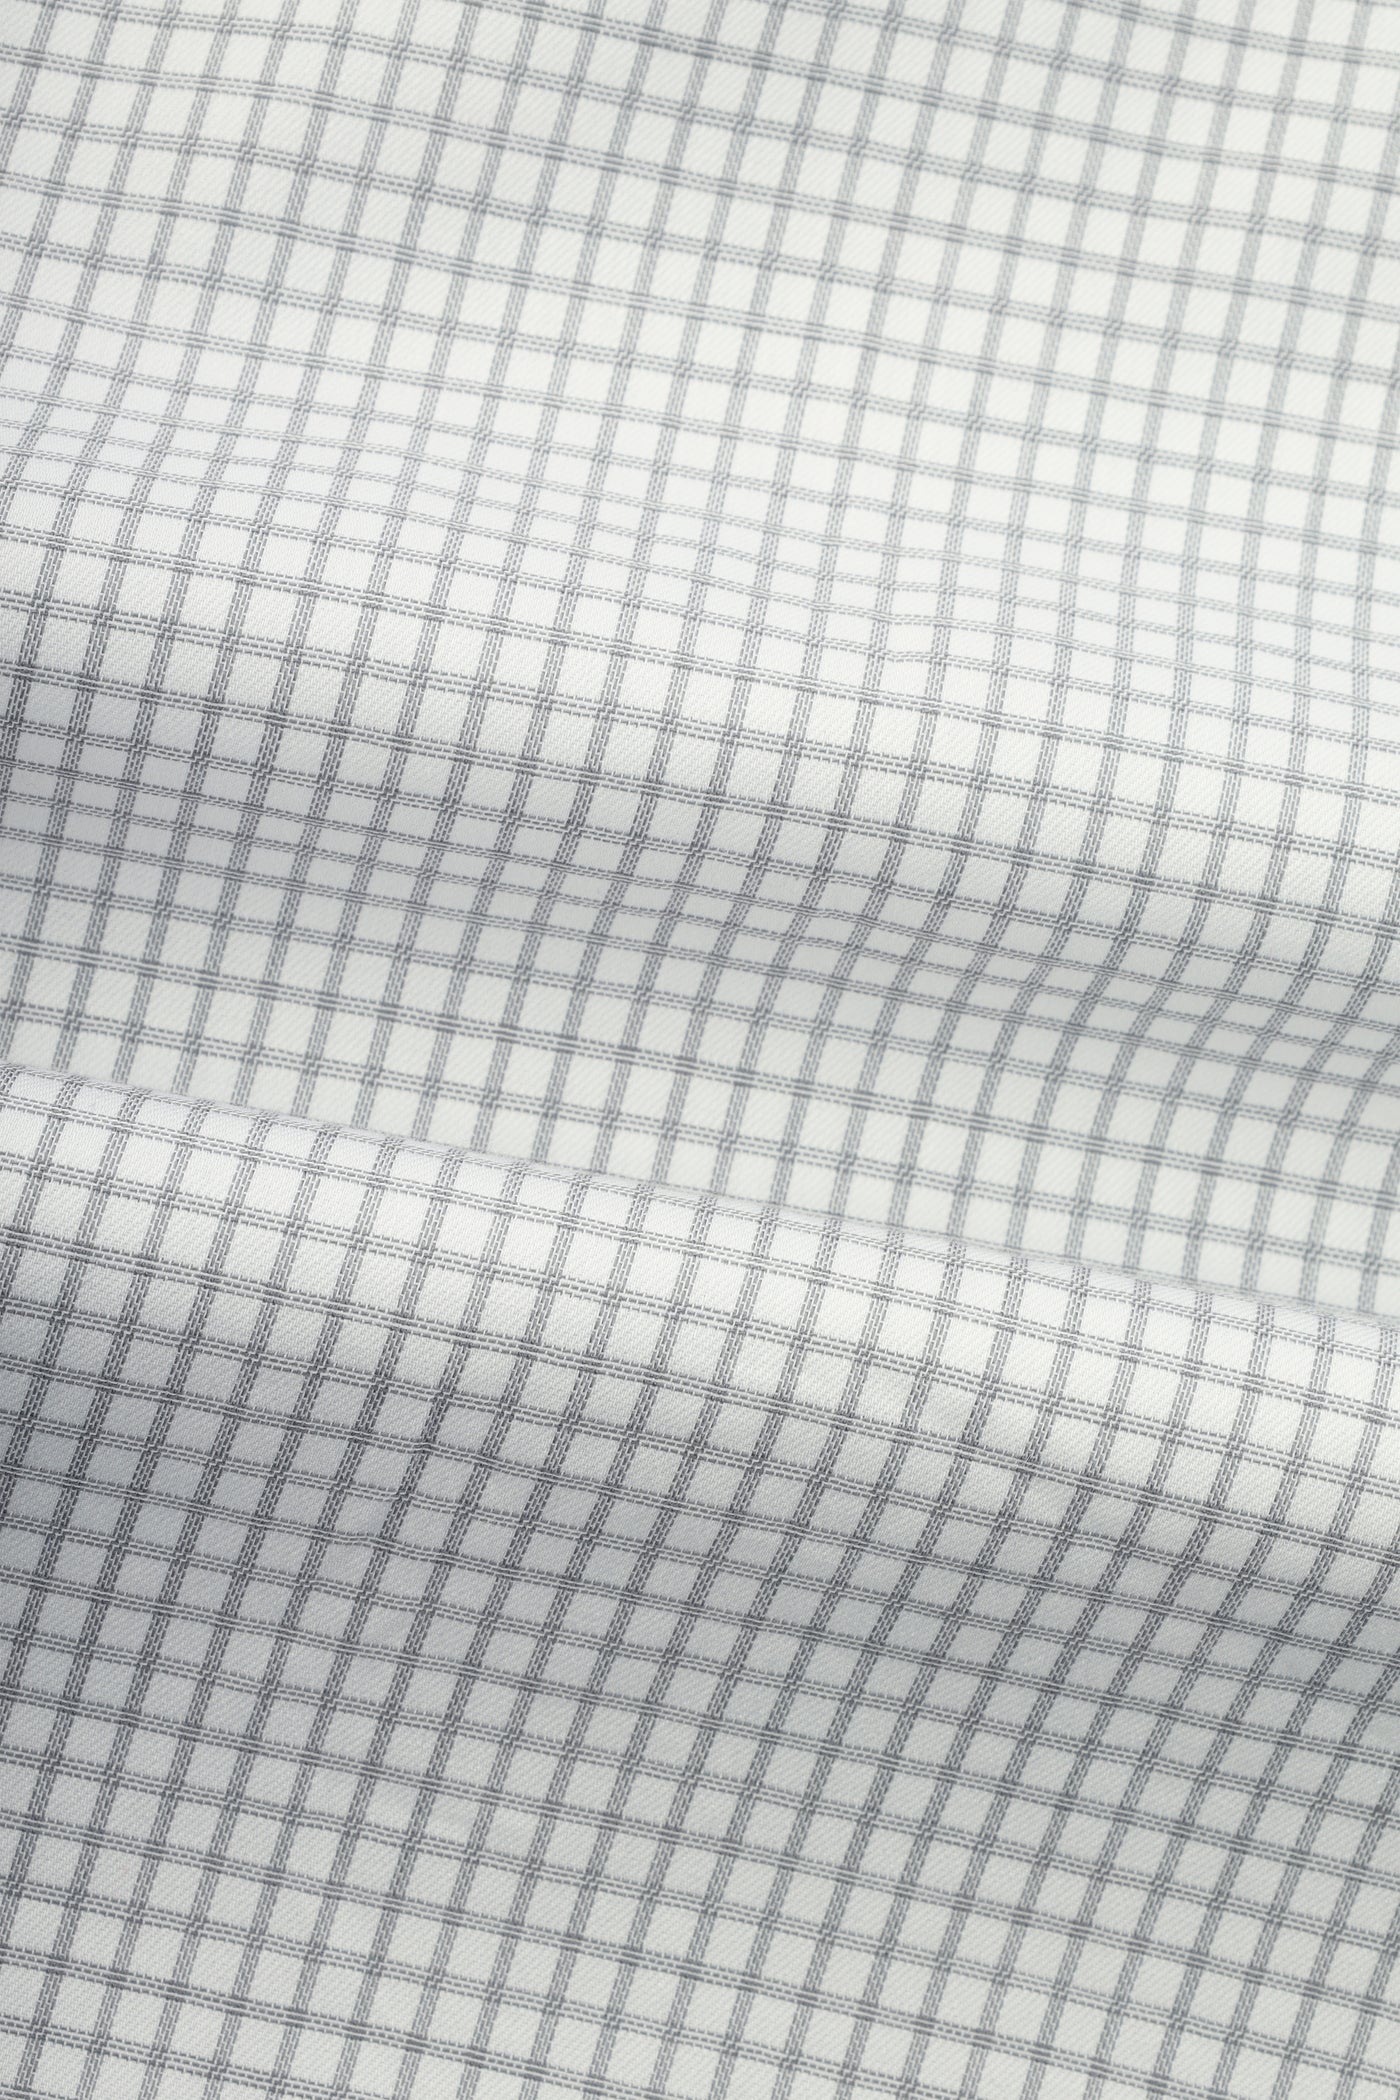 Checked White & Gray Smart Casual Shirt